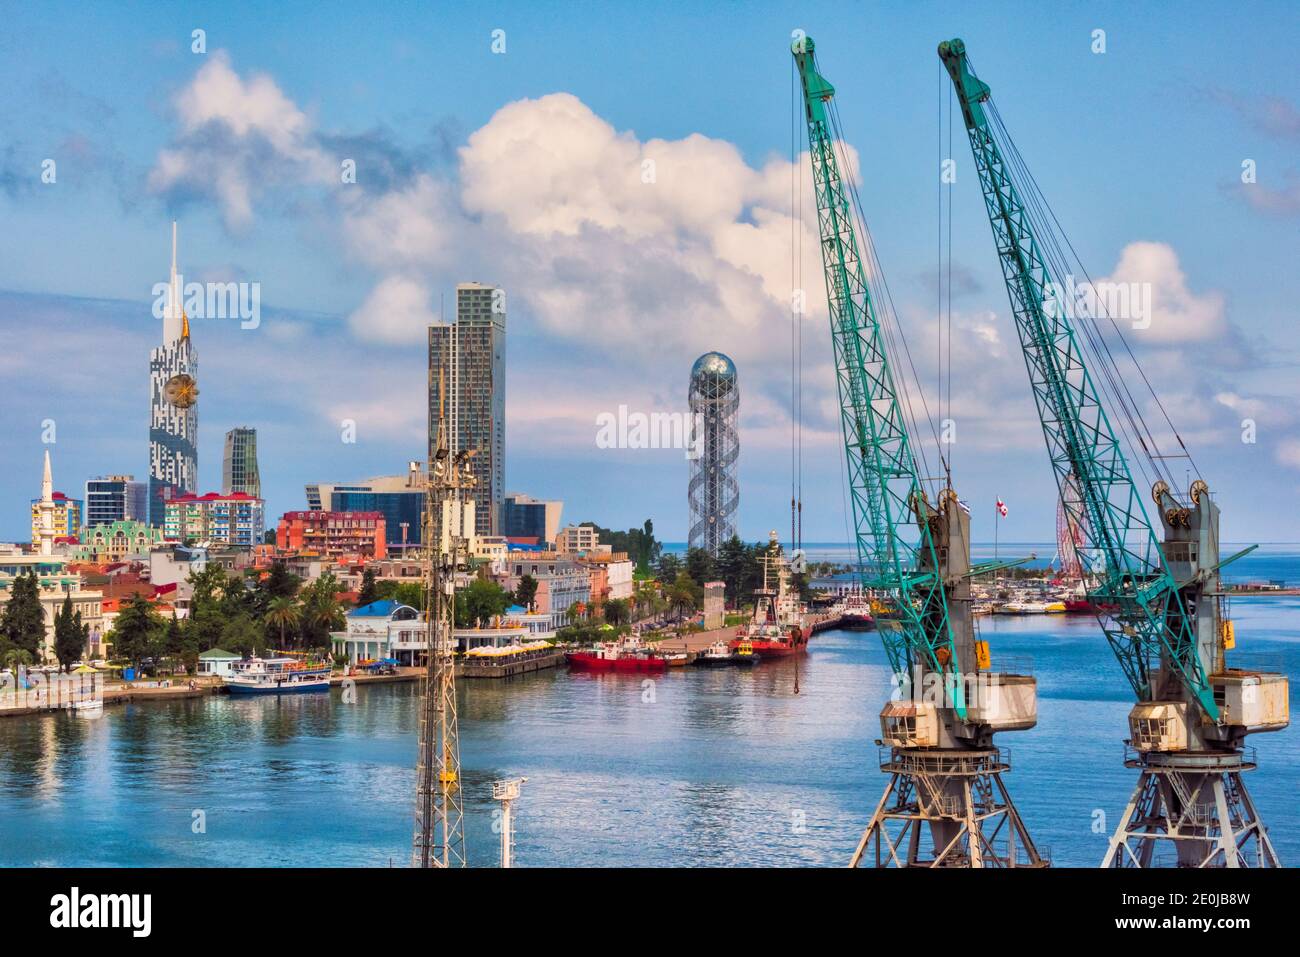 Cityscape along the coast of the Caspian Sea, Batumi Technological University Tower with a Ferris wheel built into the facade, Porta Batumi Tower and Stock Photo